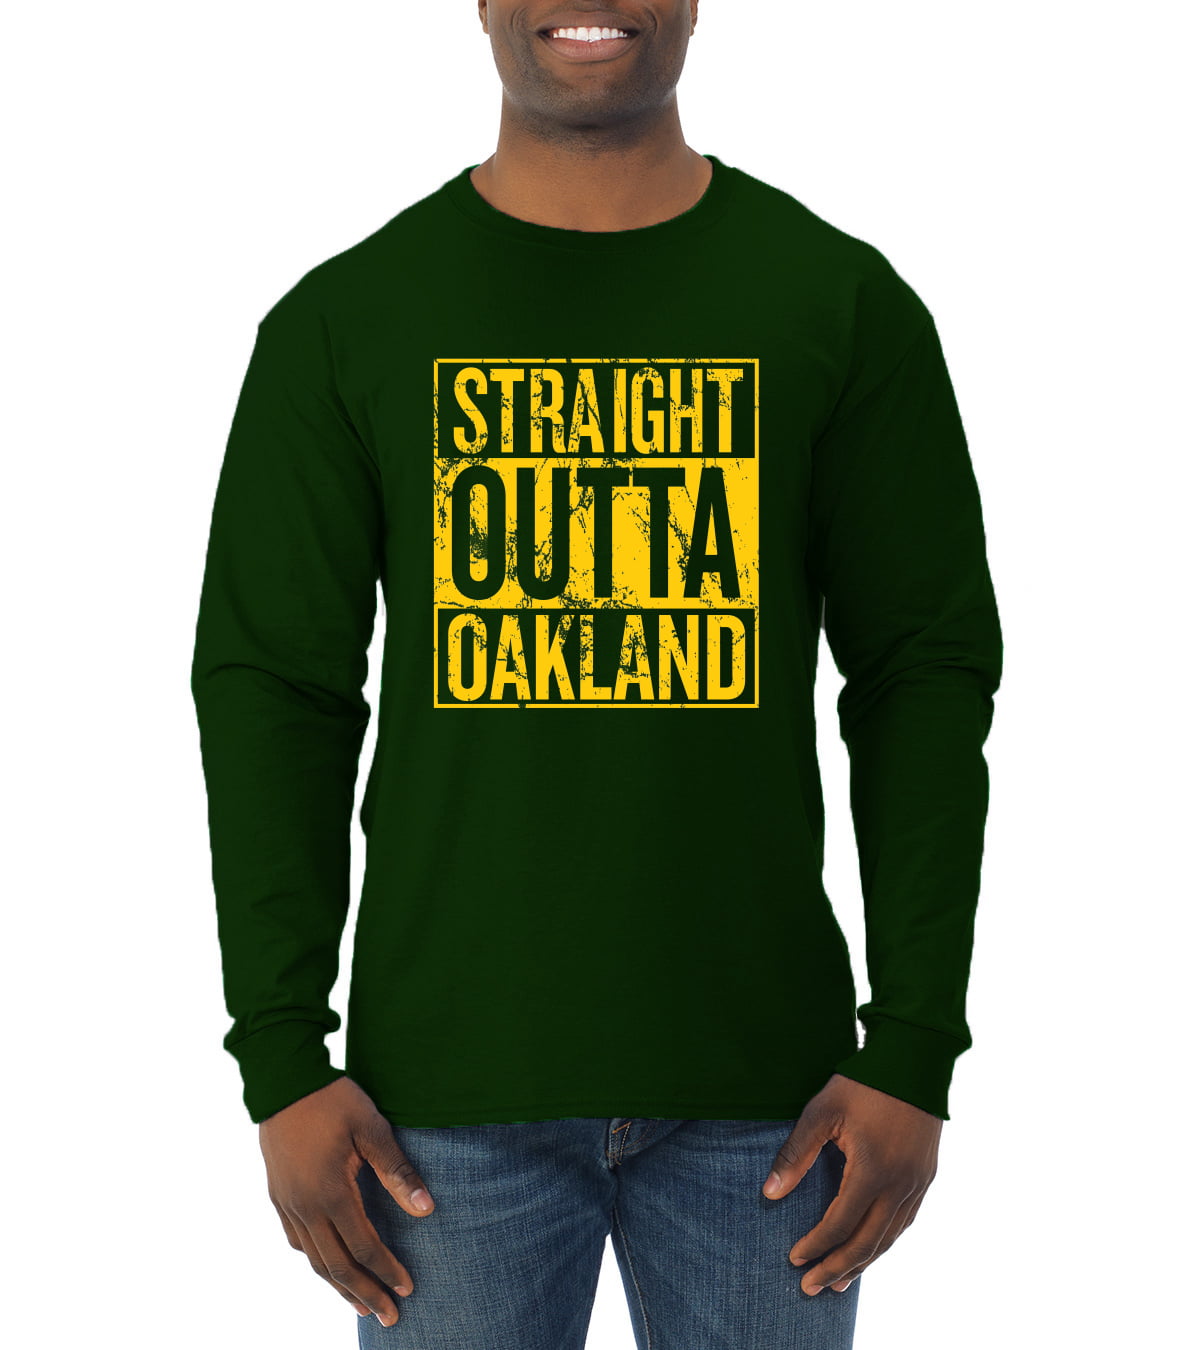 Straight Outta Oakland Black Juniors Soft T-Shirt